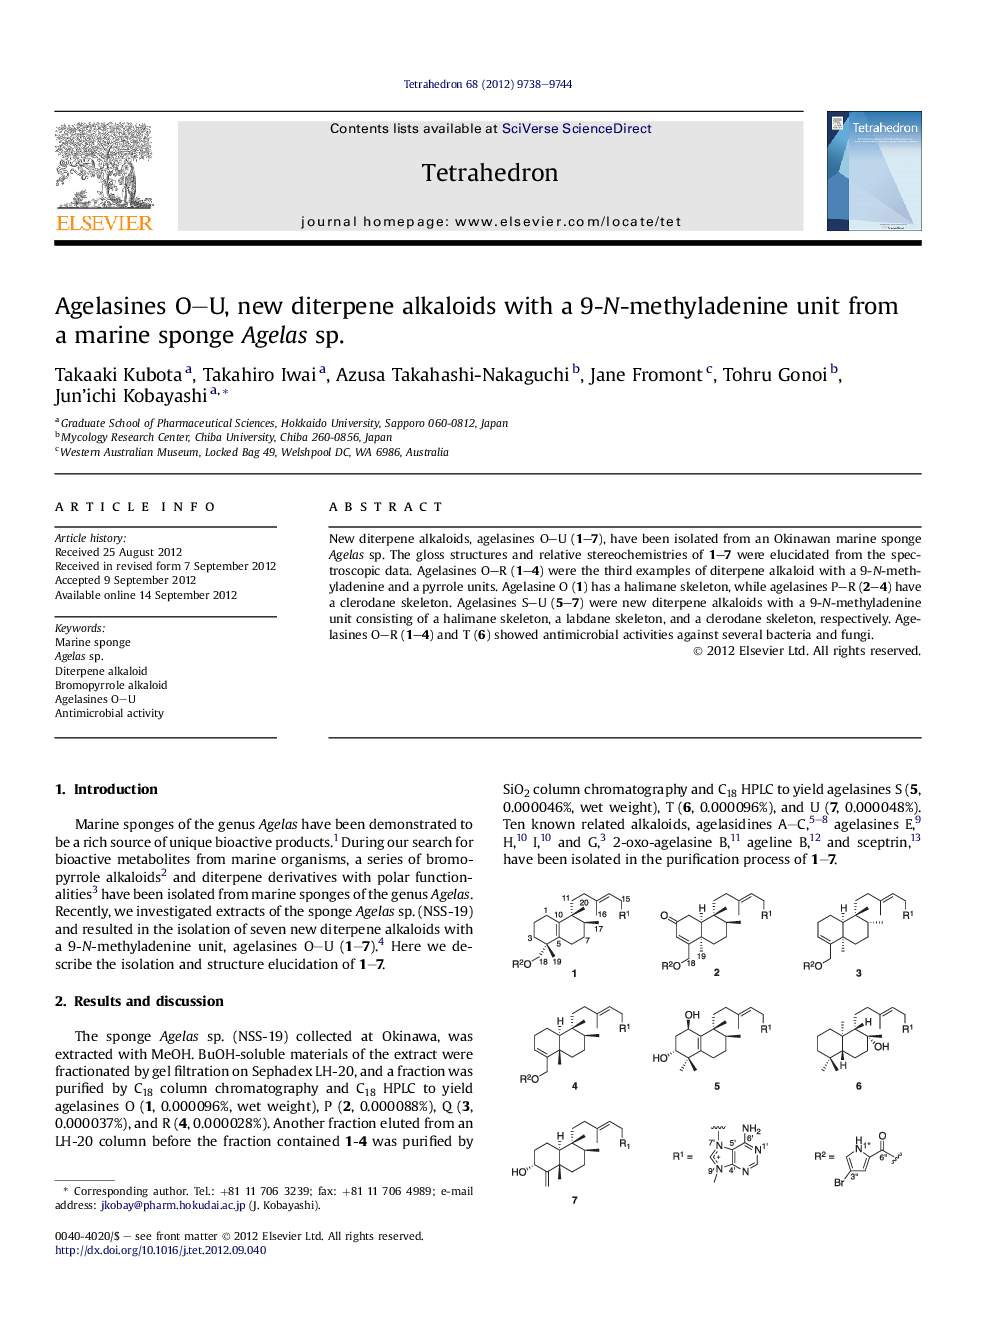 Agelasines O-U, new diterpene alkaloids with a 9-N-methyladenine unit from a marine sponge Agelas sp.